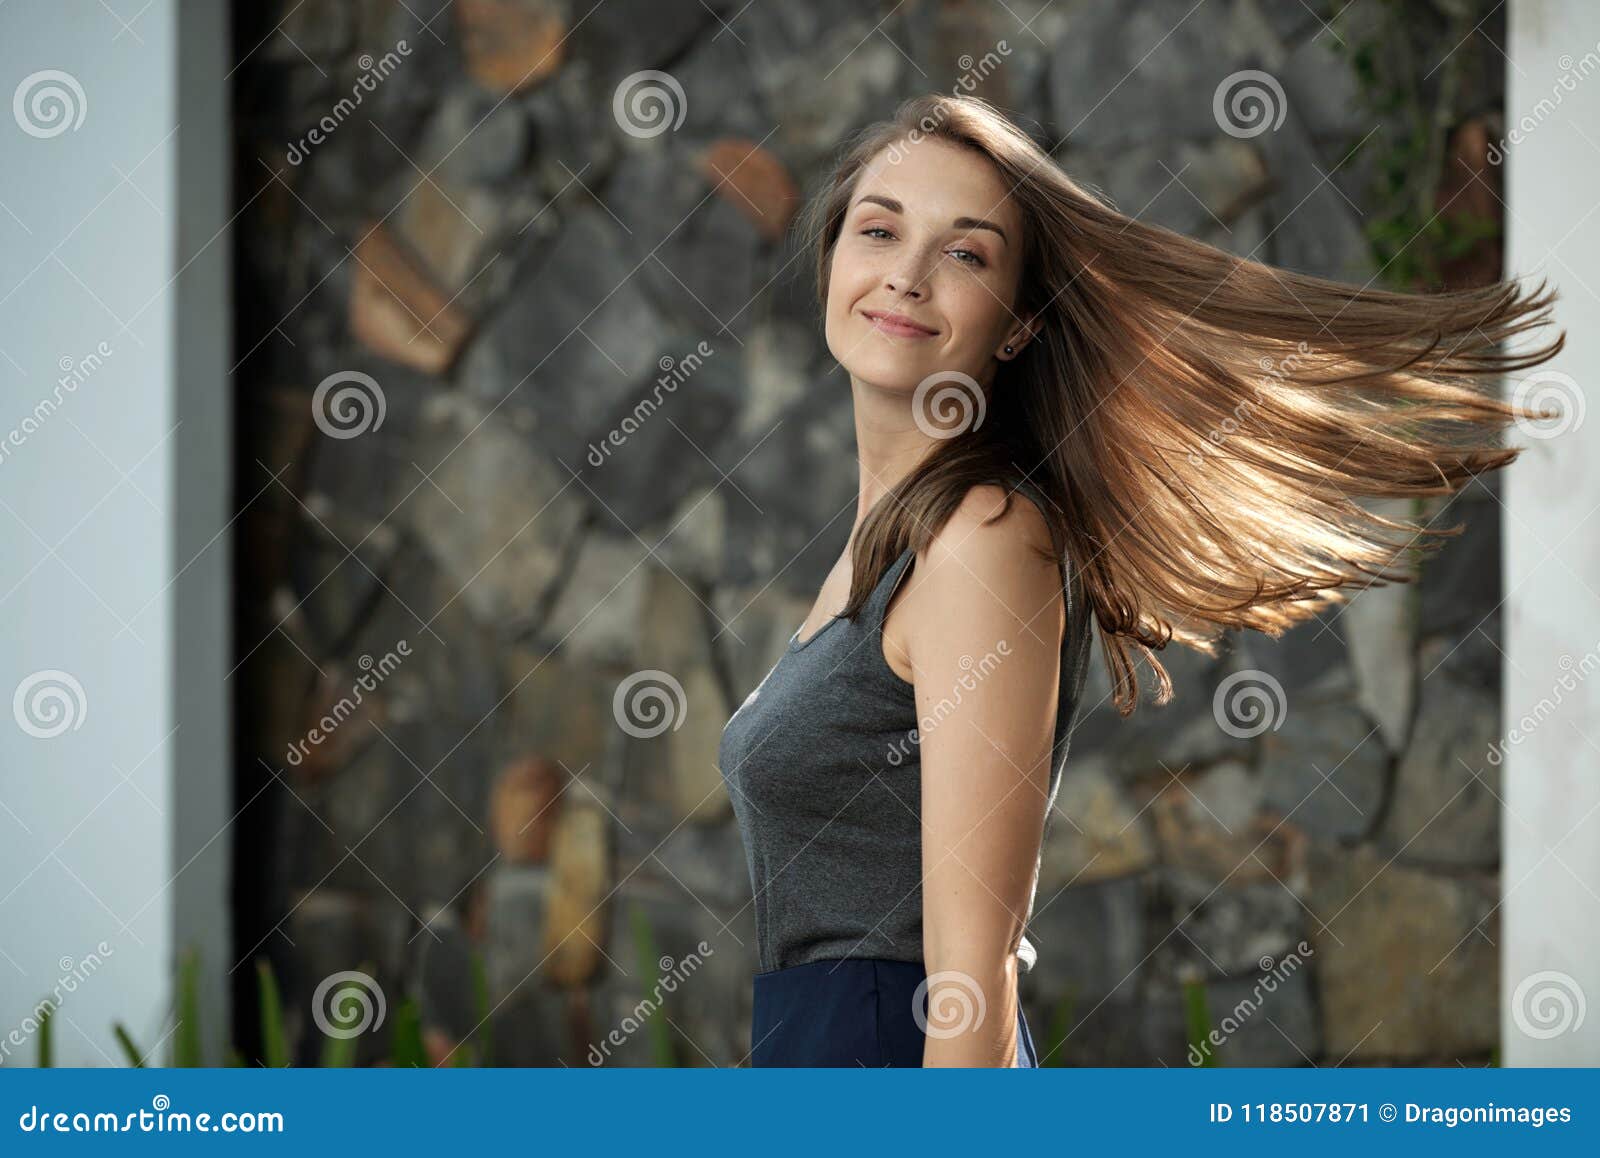 Hair flip stock image. Image of beautiful, glamour, flipping - 118507871